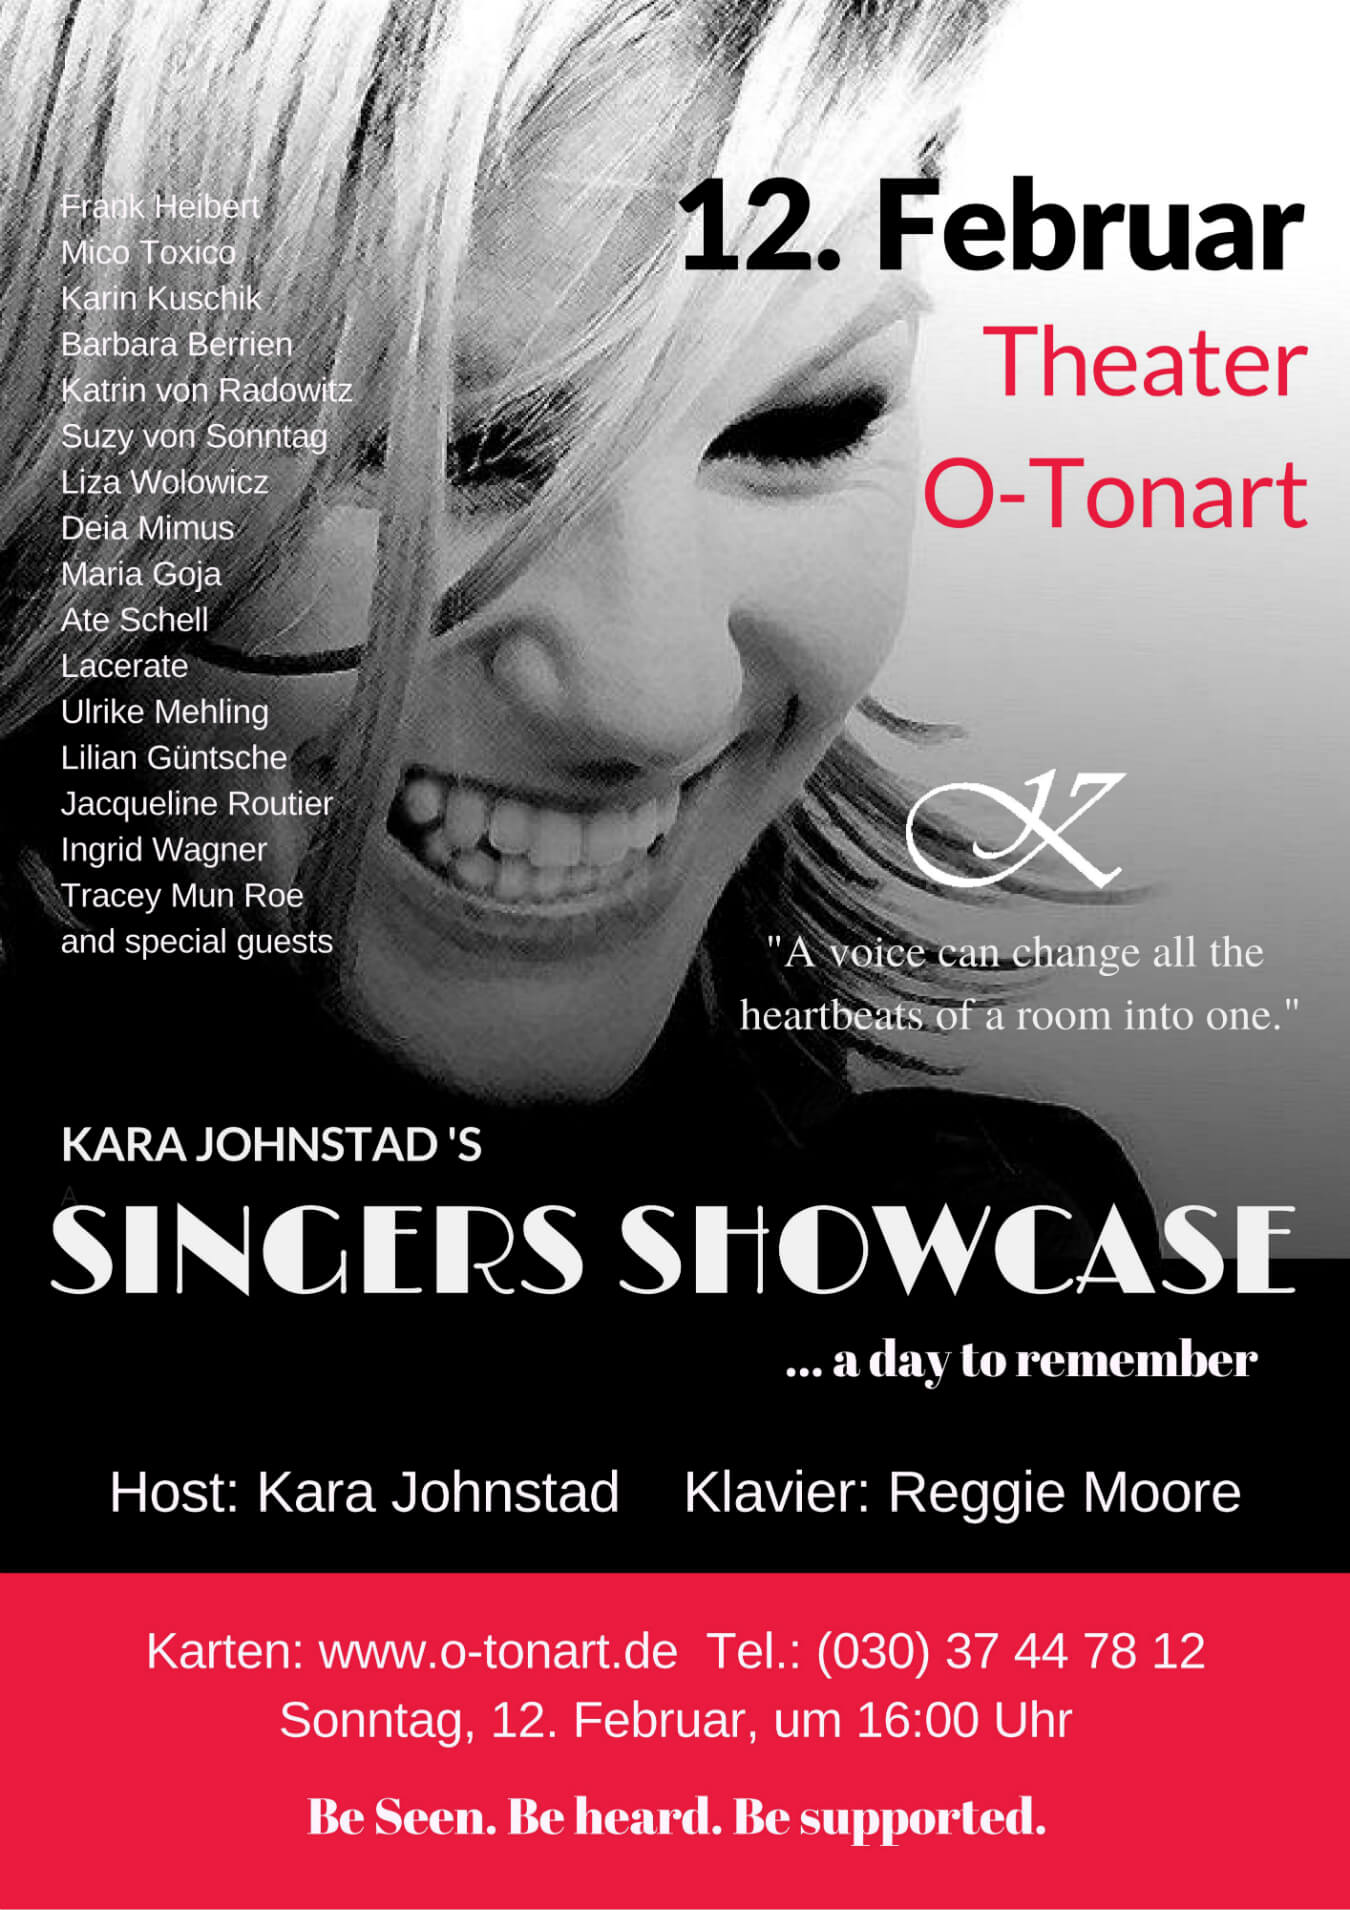 Kara Johnstad’s SINGERS SHOWCASE, Feb 12